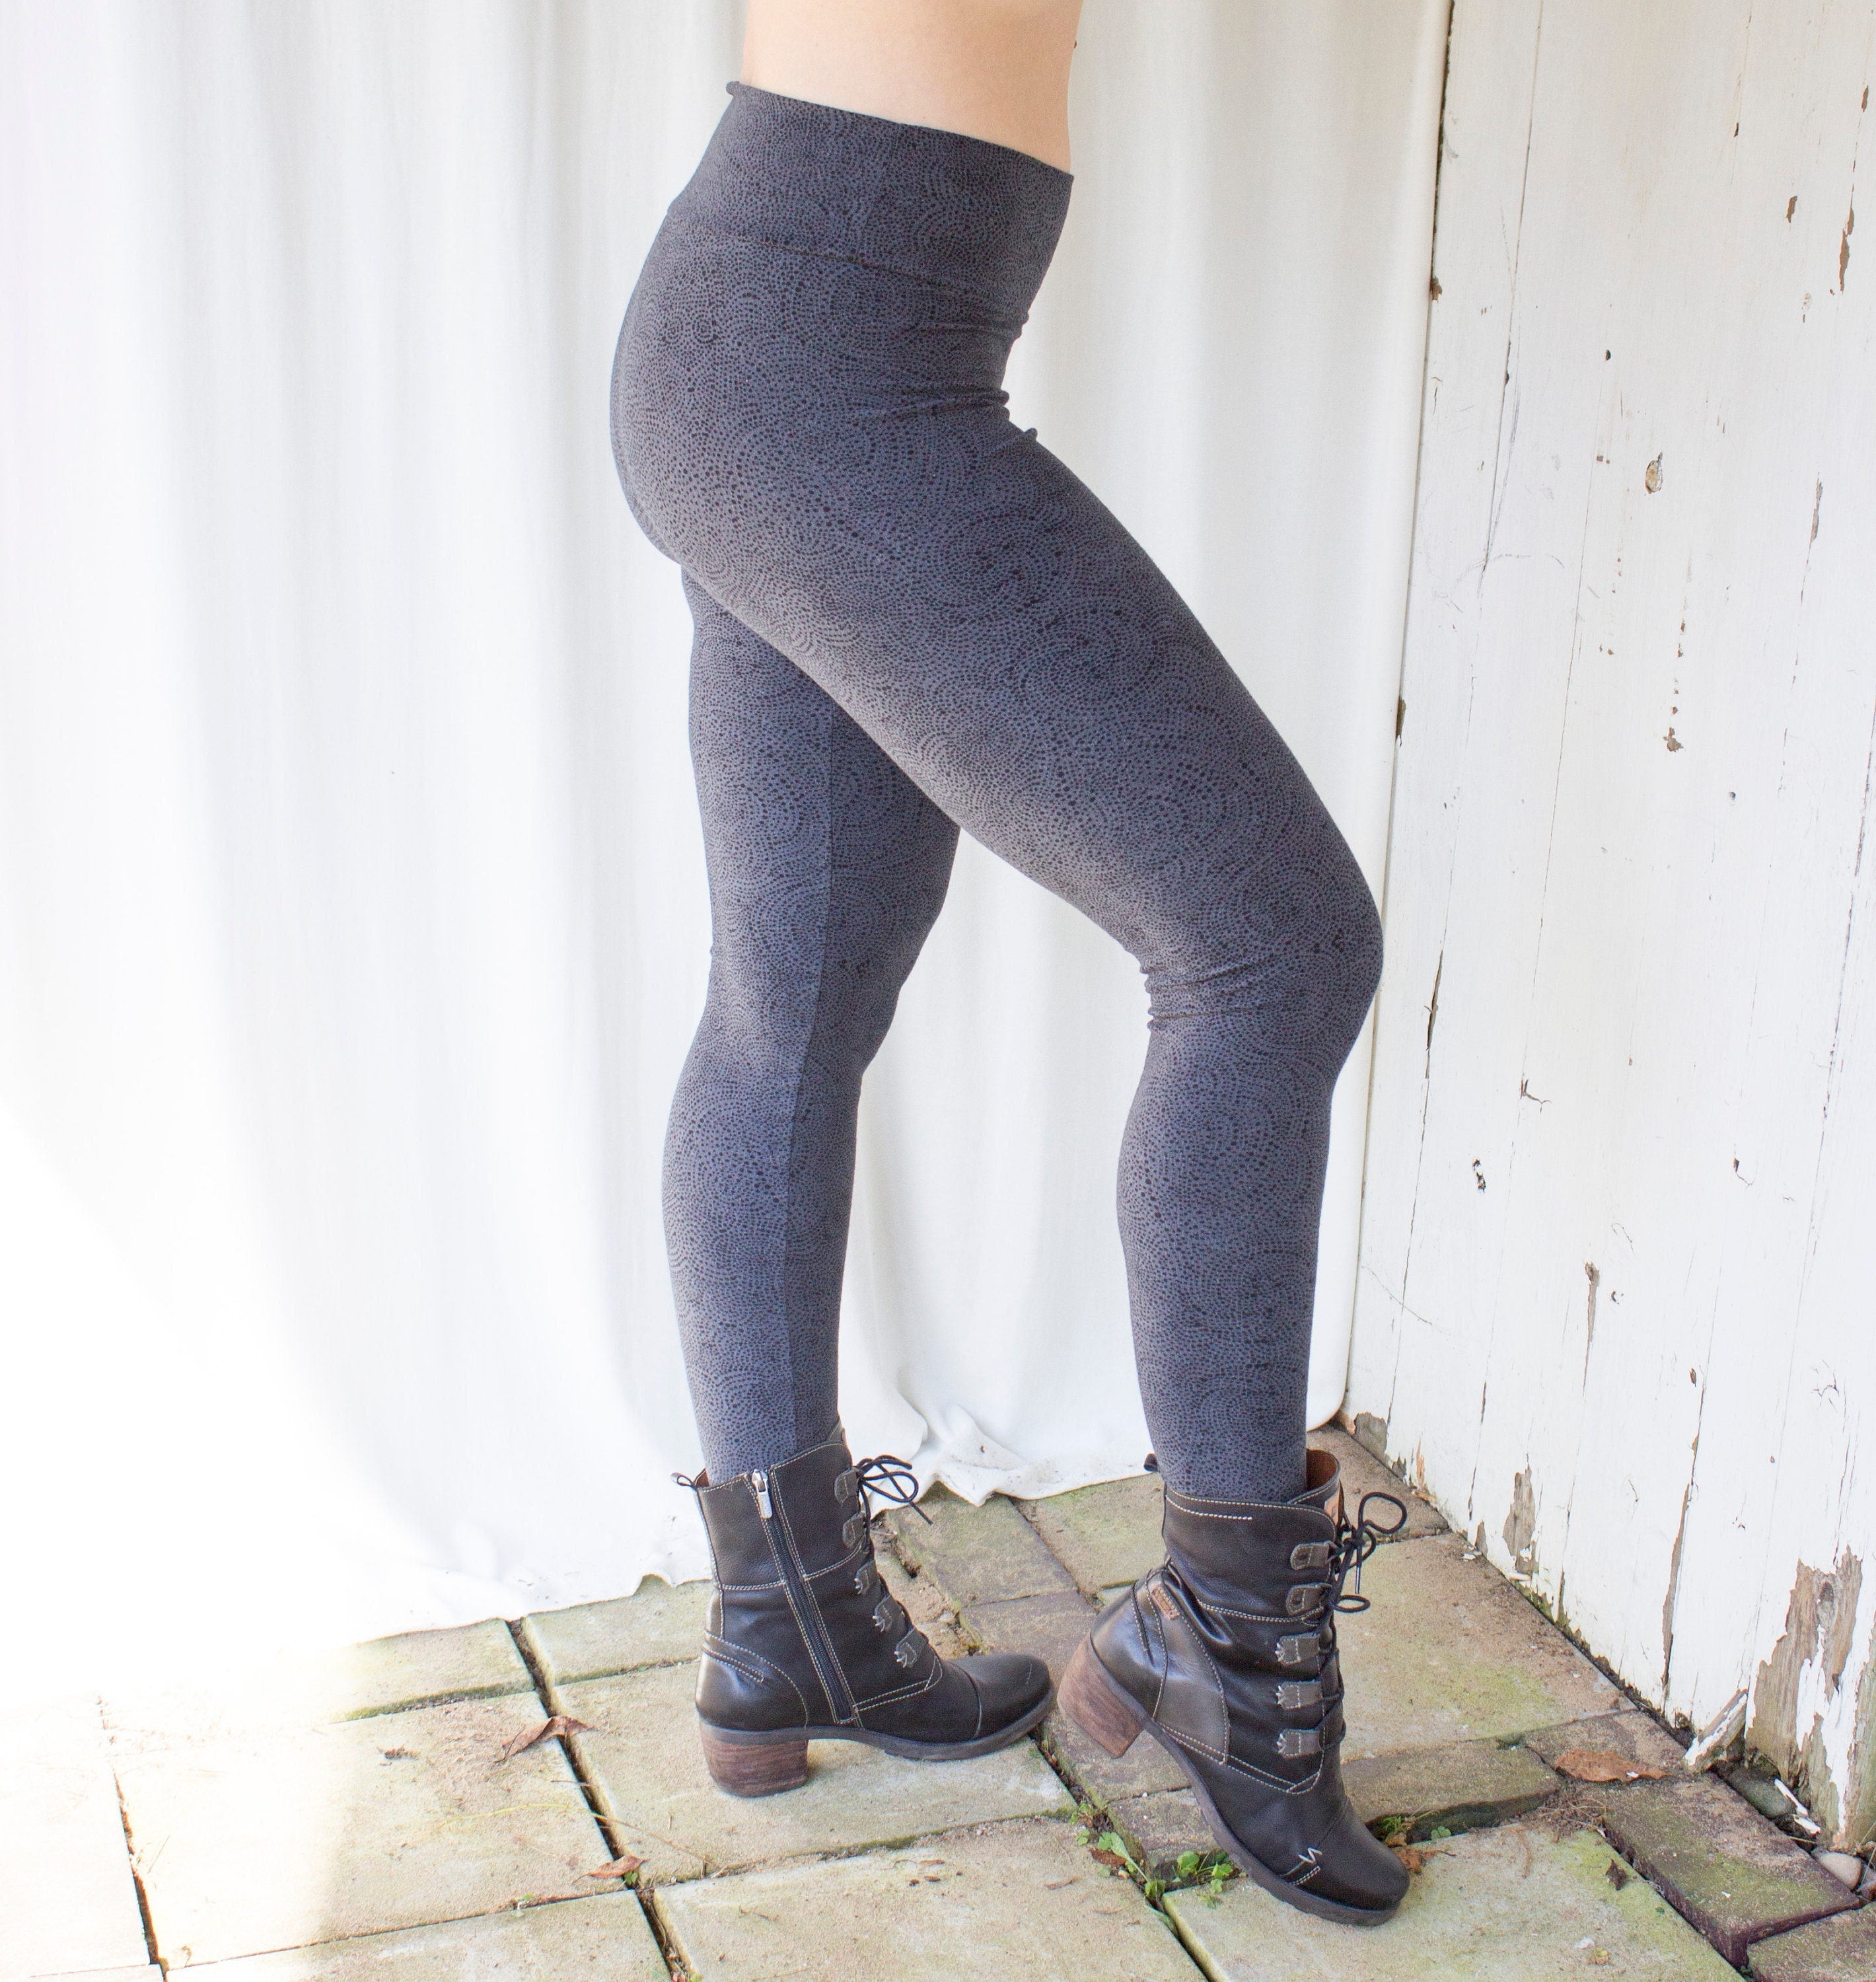 Stretch Hemp Leggings Hemp & Organic Cotton Lycra Jersey Yoga